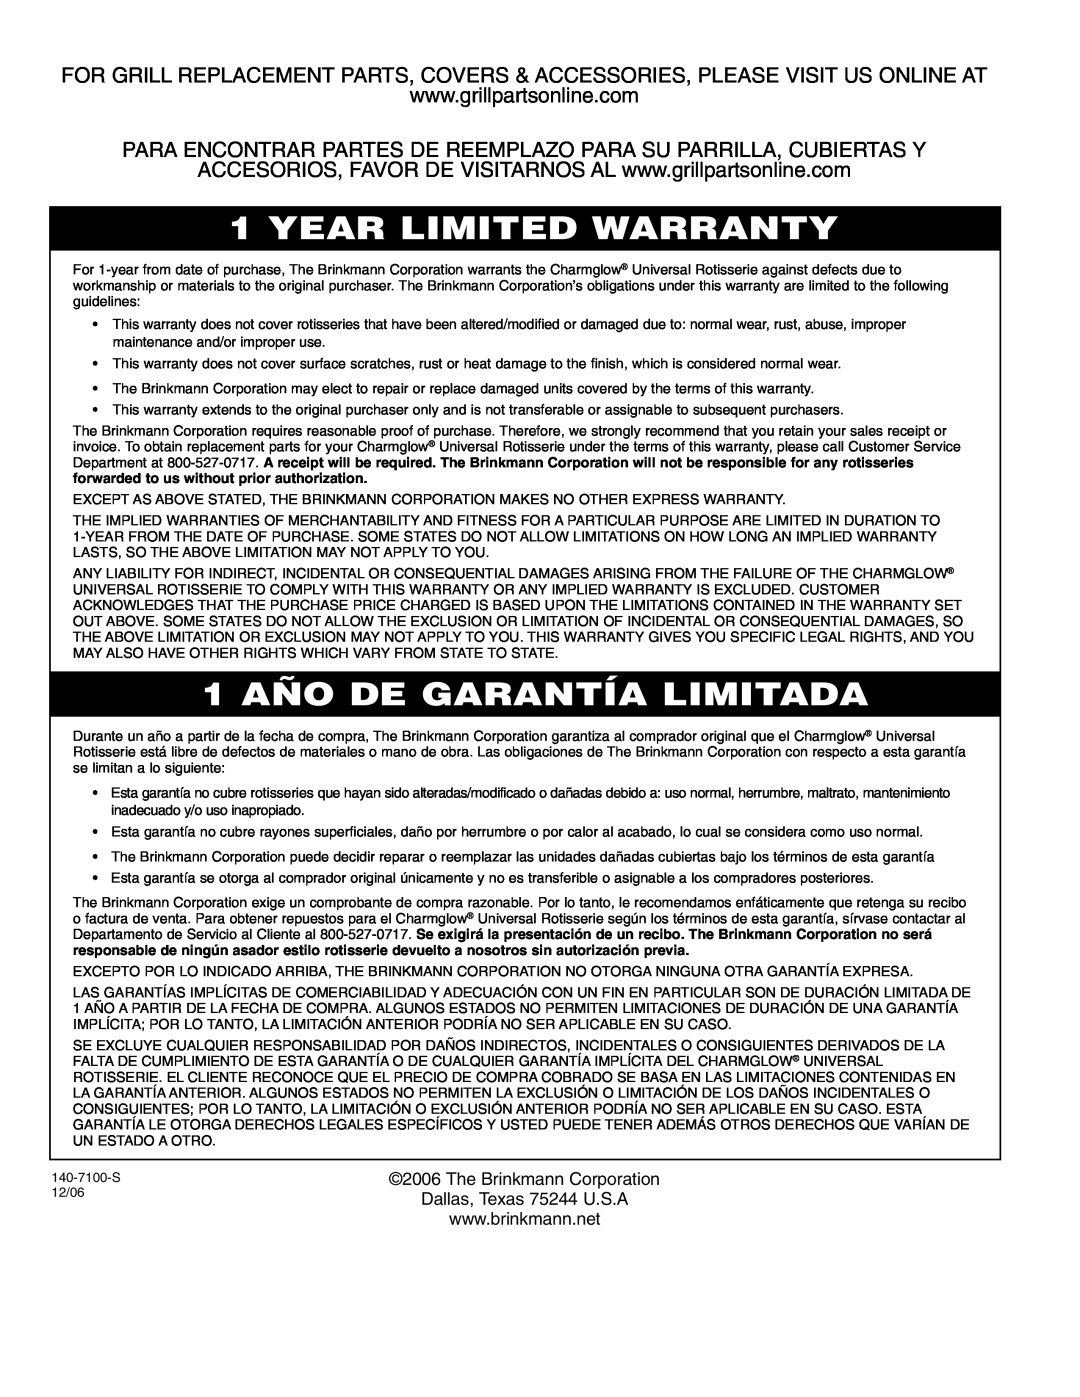 Brinkmann Universal Rotisserie manual Year Limited Warranty, 1 AÑO DE GARANTÍA LIMITADA 